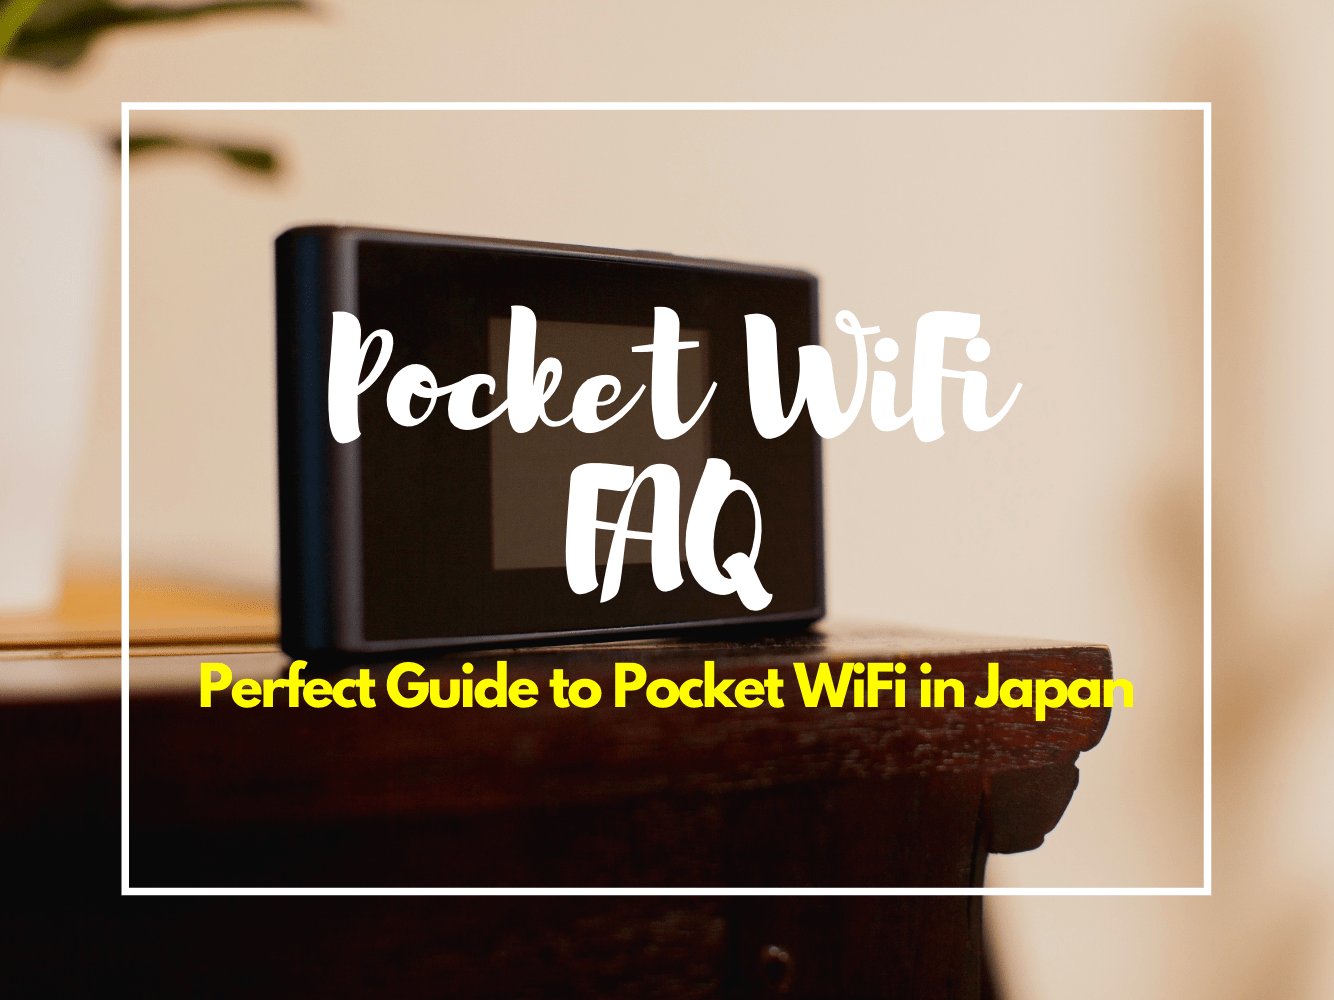 Rental Pocket WiFi FAQ in Japan